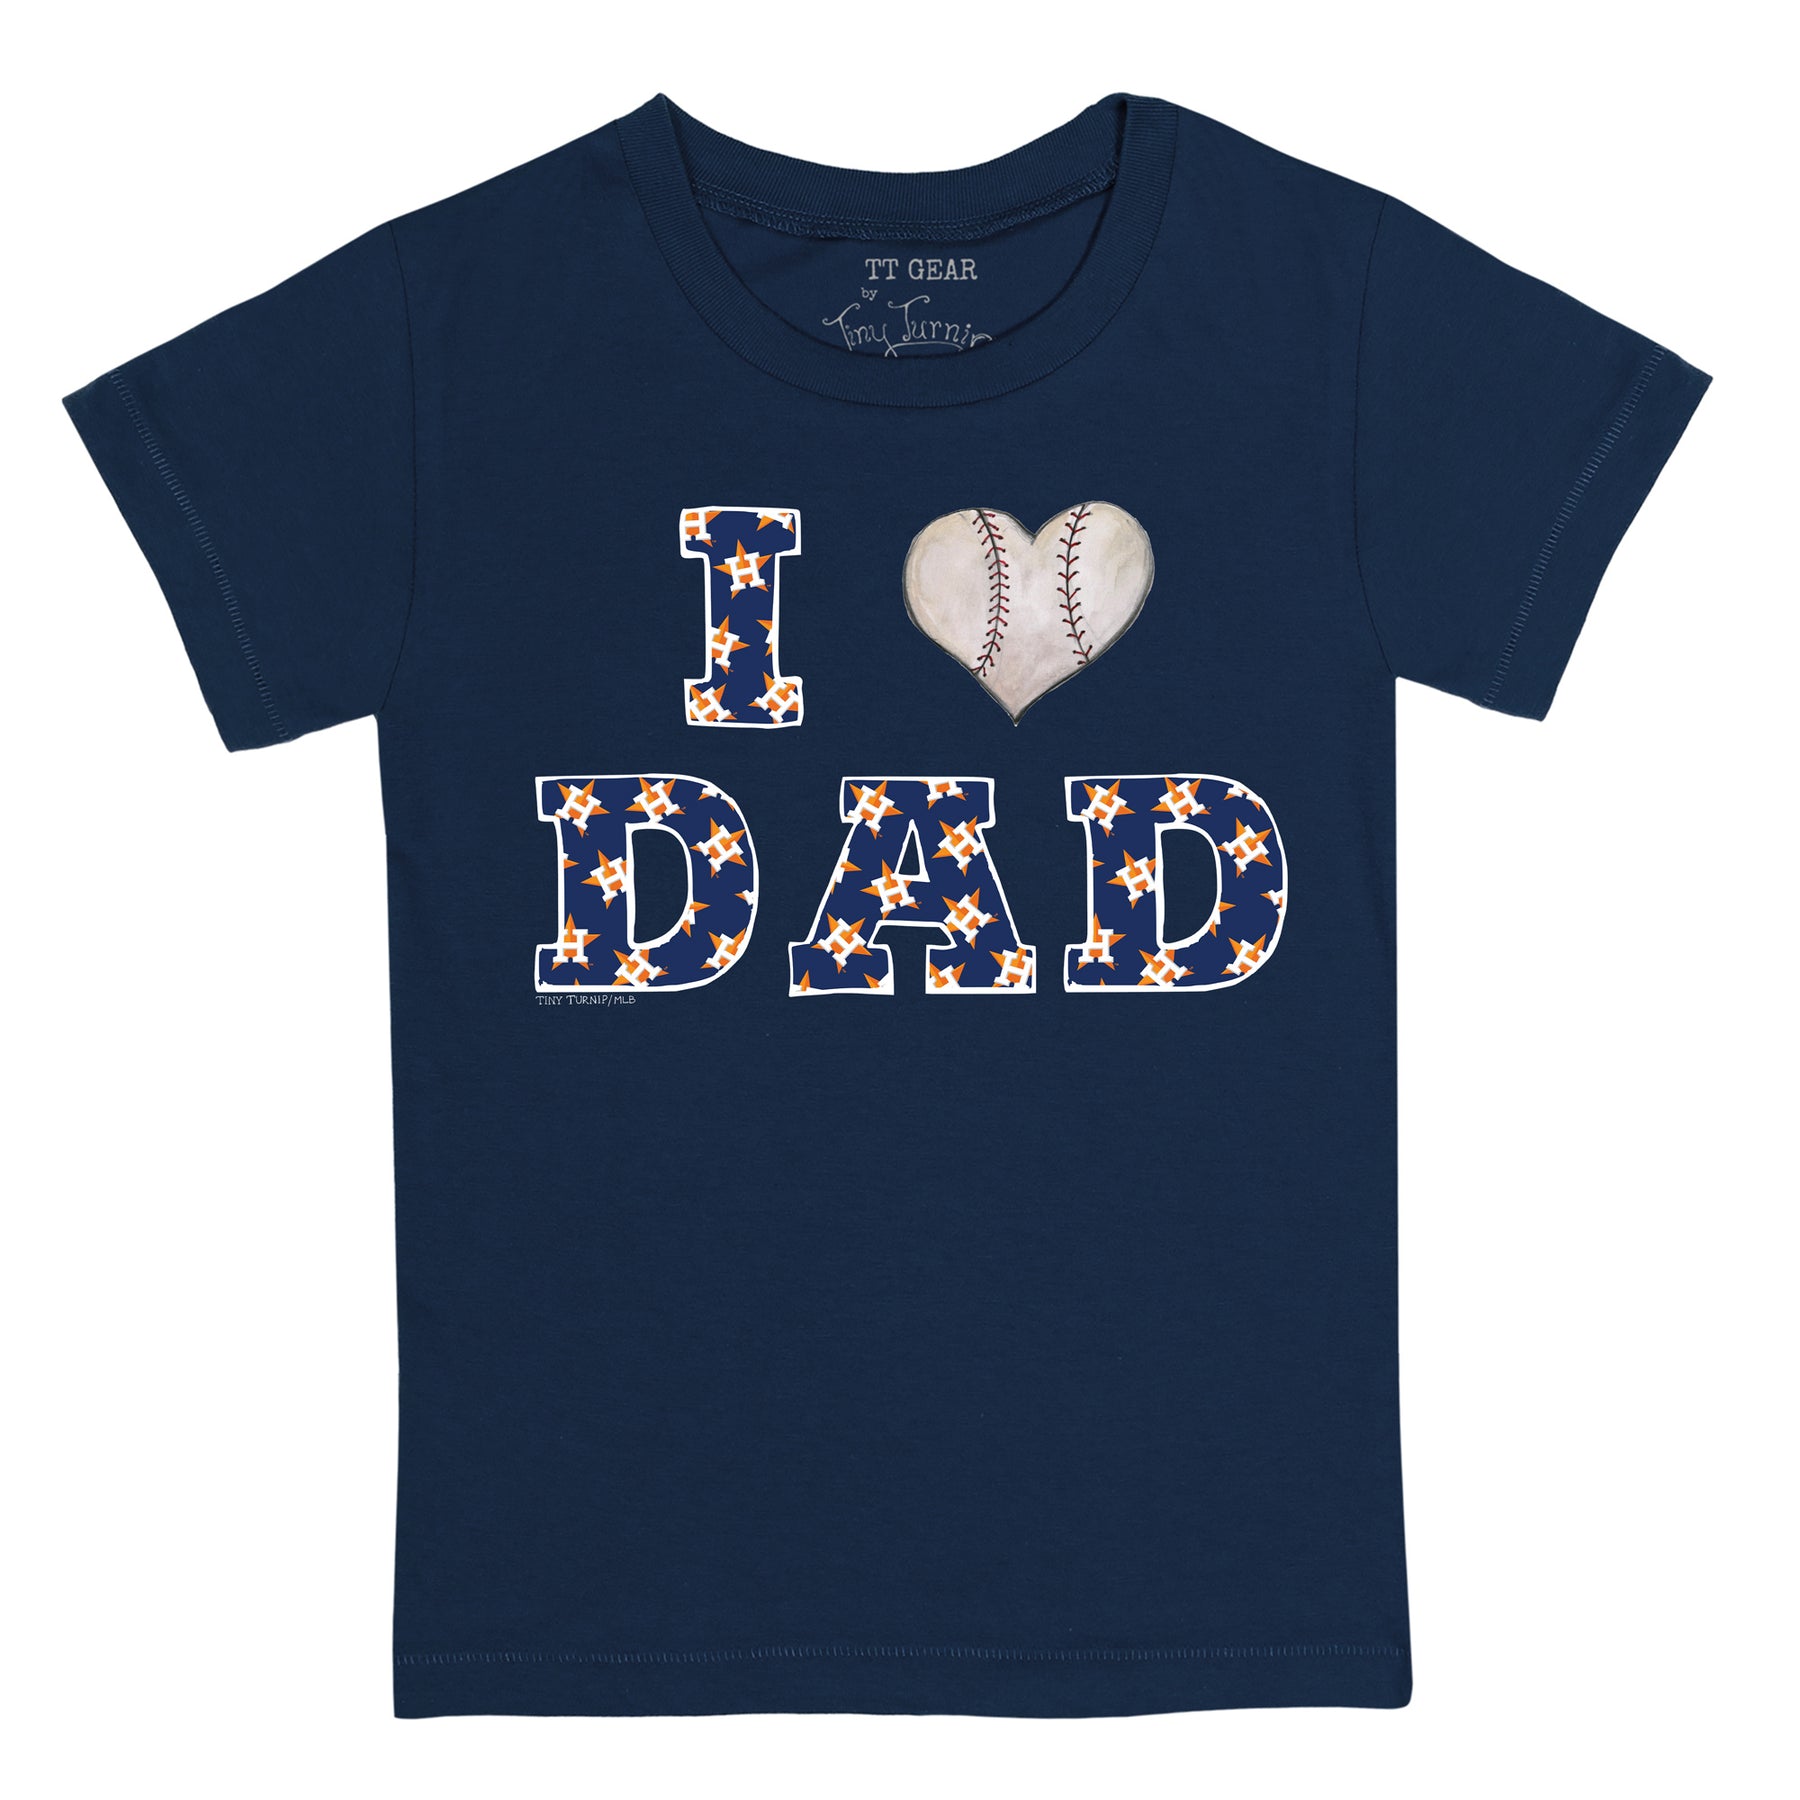 houston astros dad shirt